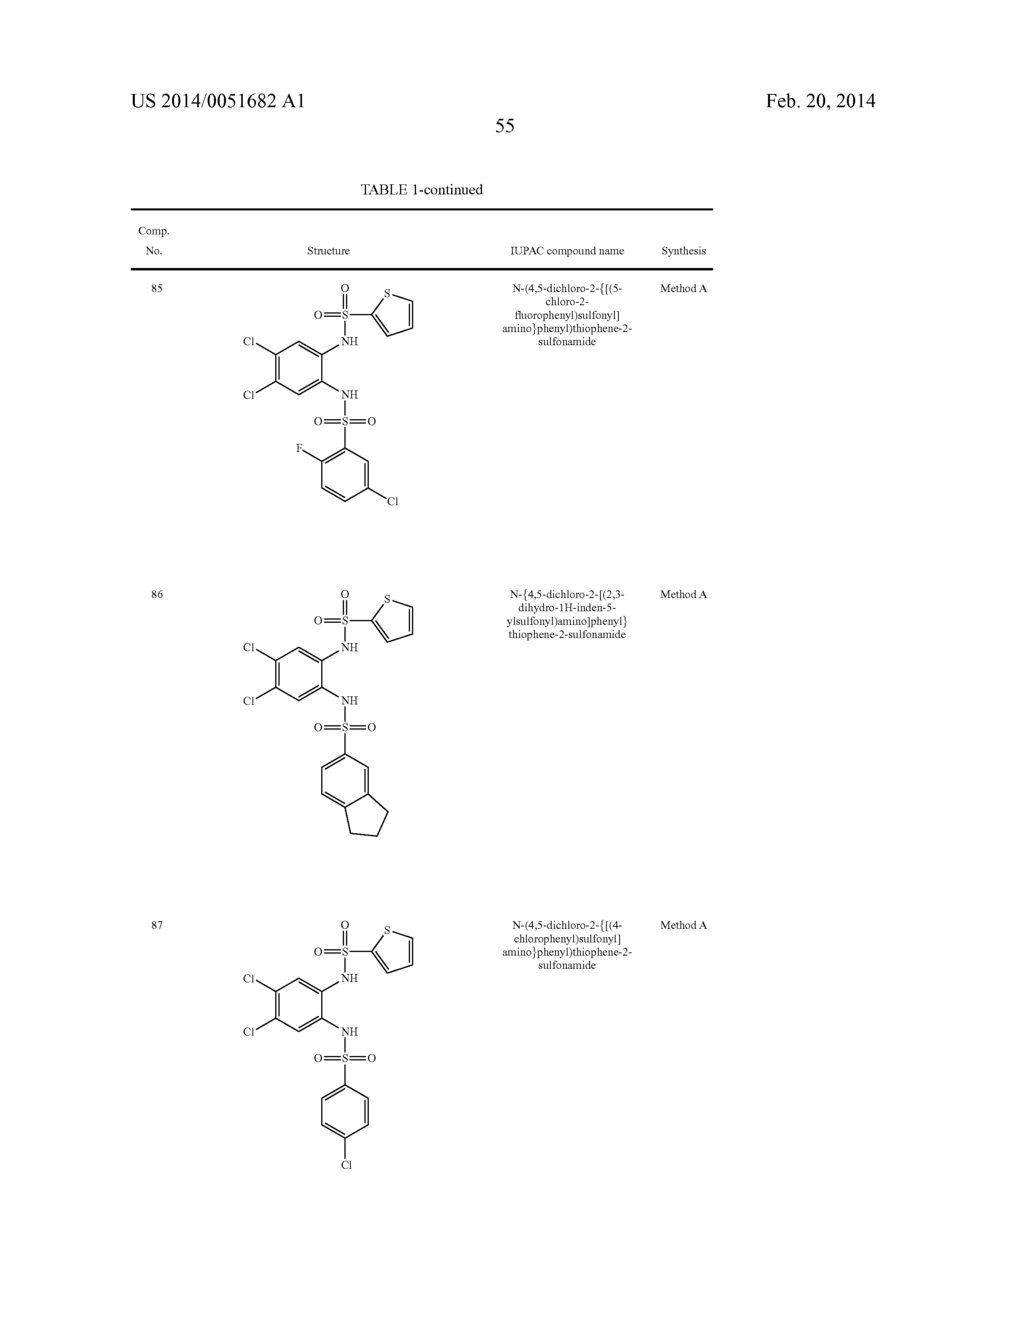 NOVEL 1,2- BIS-SULFONAMIDE DERIVATIVES AS CHEMOKINE RECEPTOR MODULATORS - diagram, schematic, and image 56